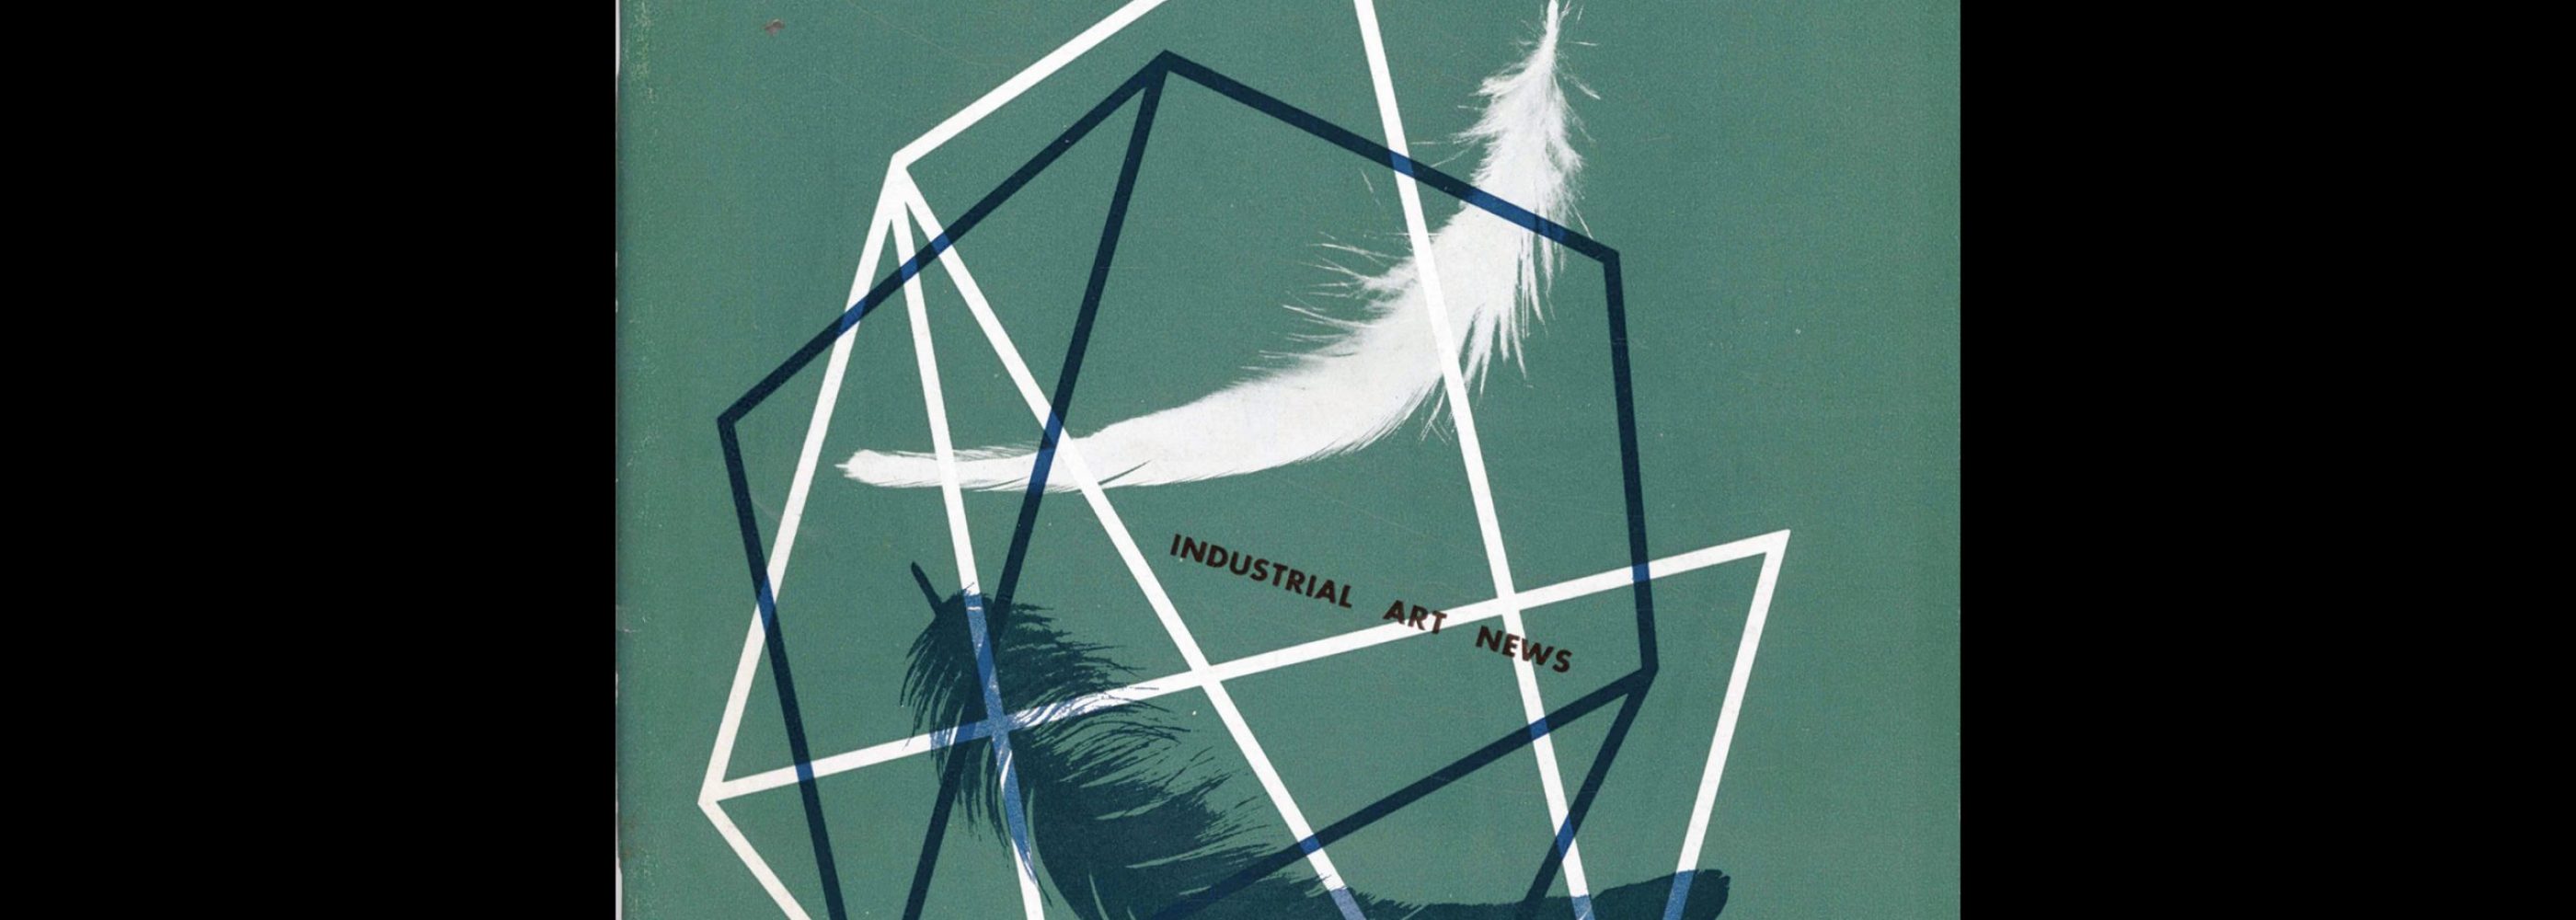 Industrial Art News - Vol. 26, No. 6, July 1958. Cover design by Jun Kusakari